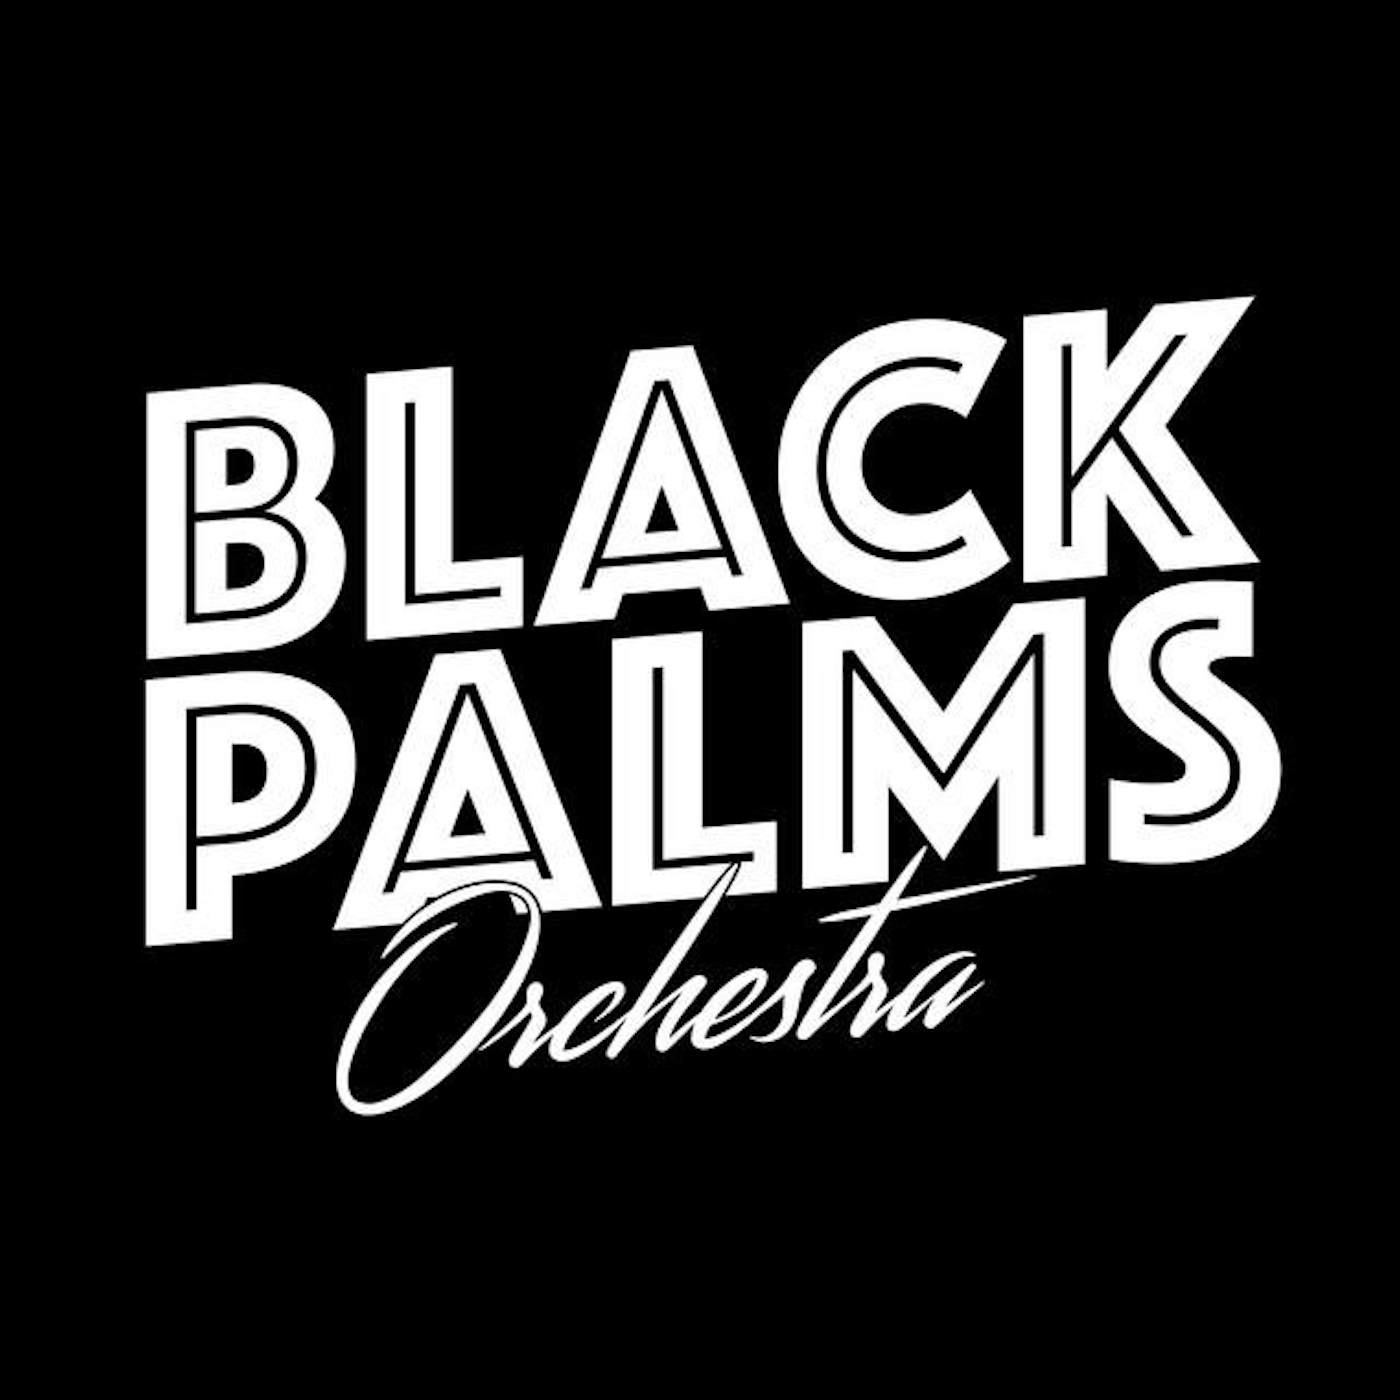 Black Palms Orchestra